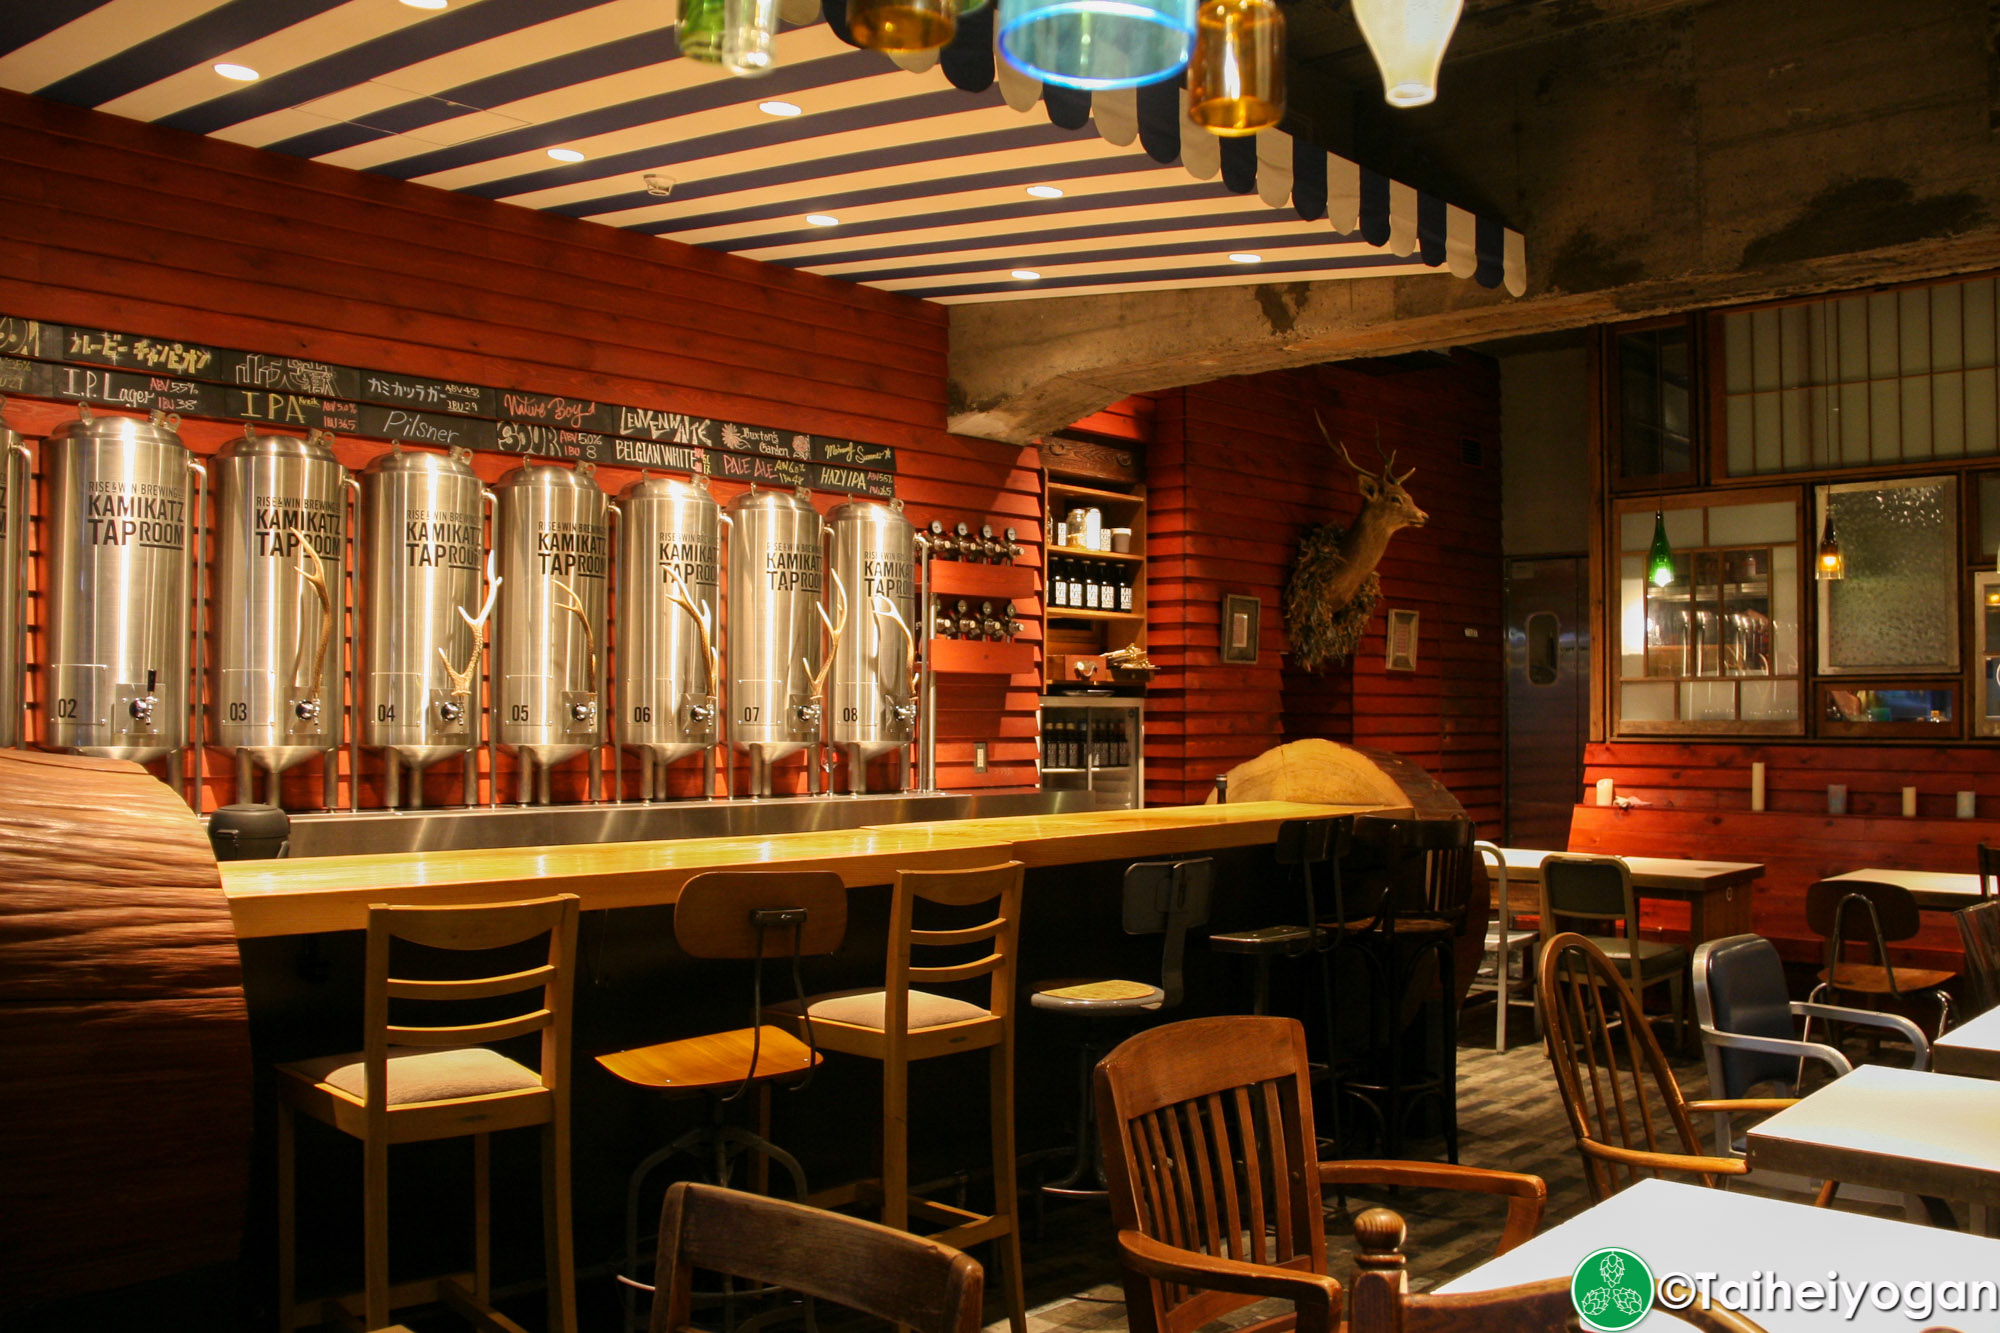 Kamikatz Taproom (Rise & Win Brewing Co.) - Interior - Bar Counter